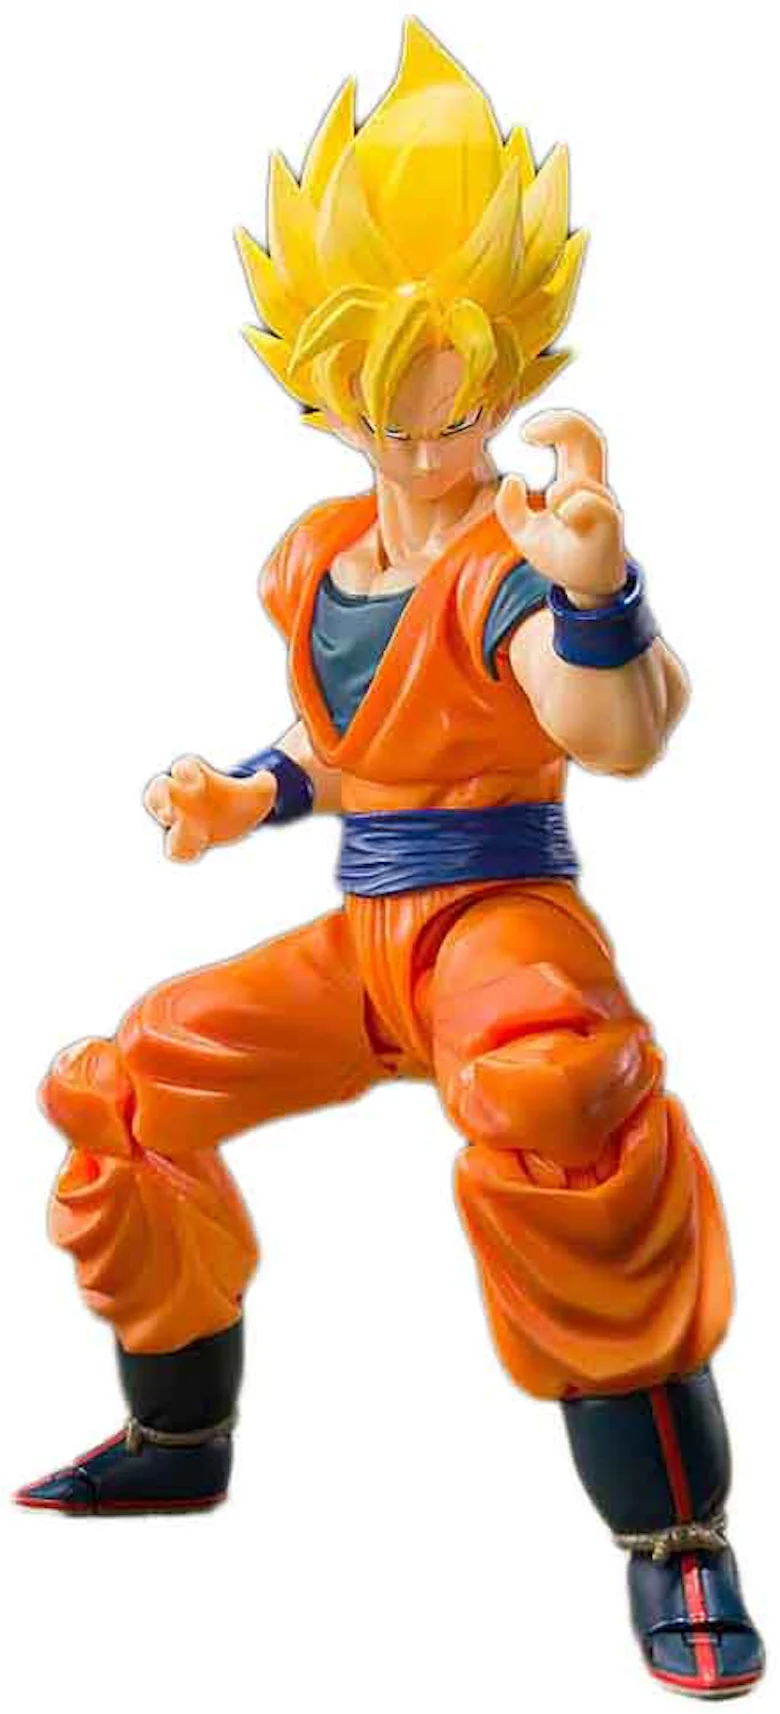 https://images.stockx.com/images/Bandai-SHFiguarts-Dragon-Ball-Z-Super-Saiyan-Full-Power-Son-Goku-Action-Figure-Orange.jpg?fit=fill&bg=FFFFFF&w=1200&h=857&fm=webp&auto=compress&dpr=2&trim=color&updated_at=1633450000&q=60